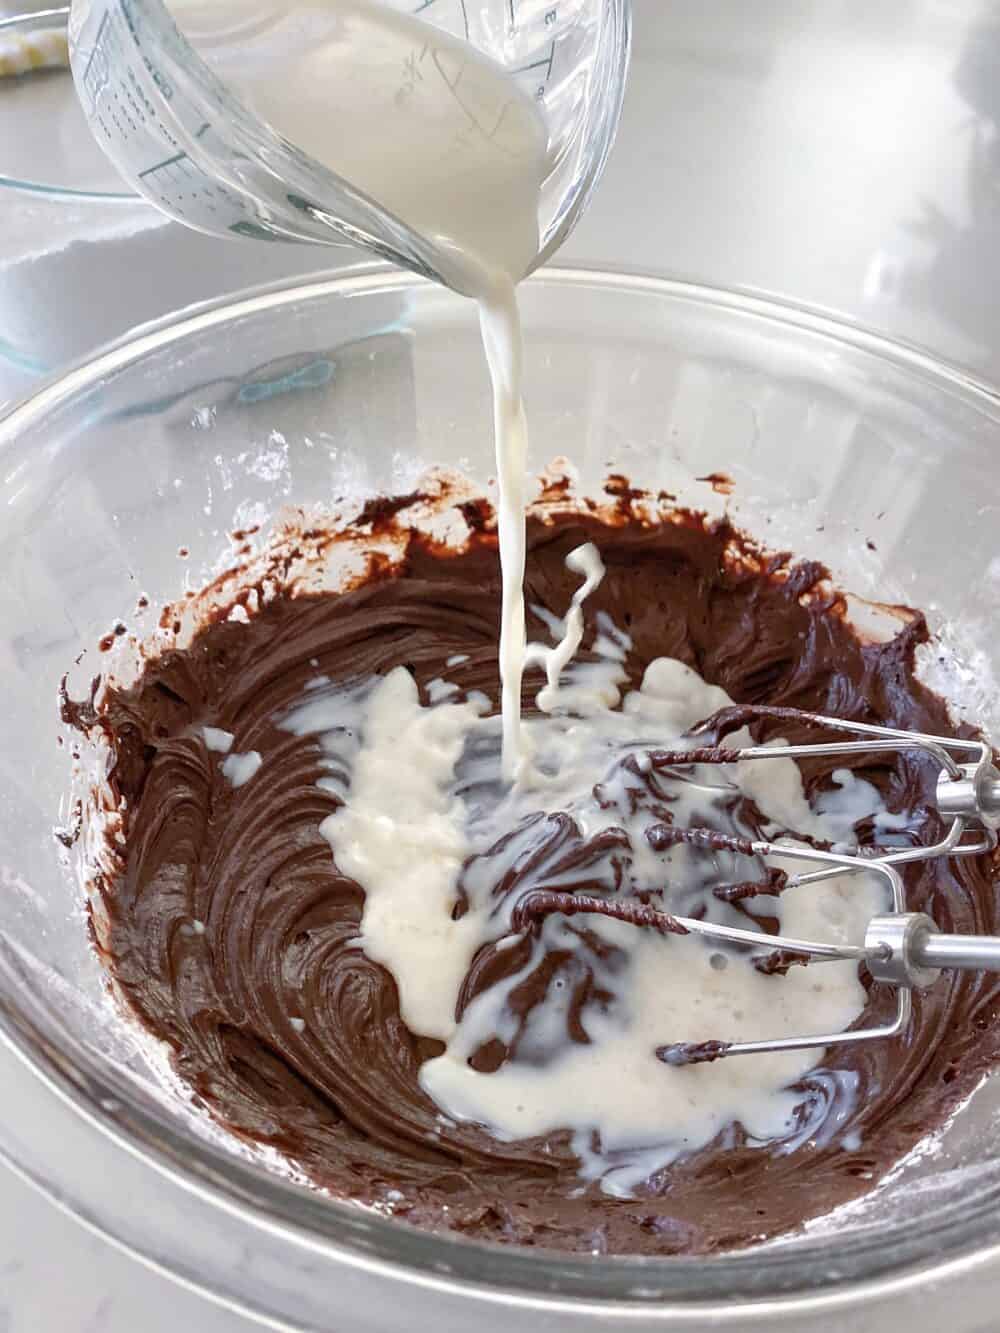 preparing homemade chocolate frosting